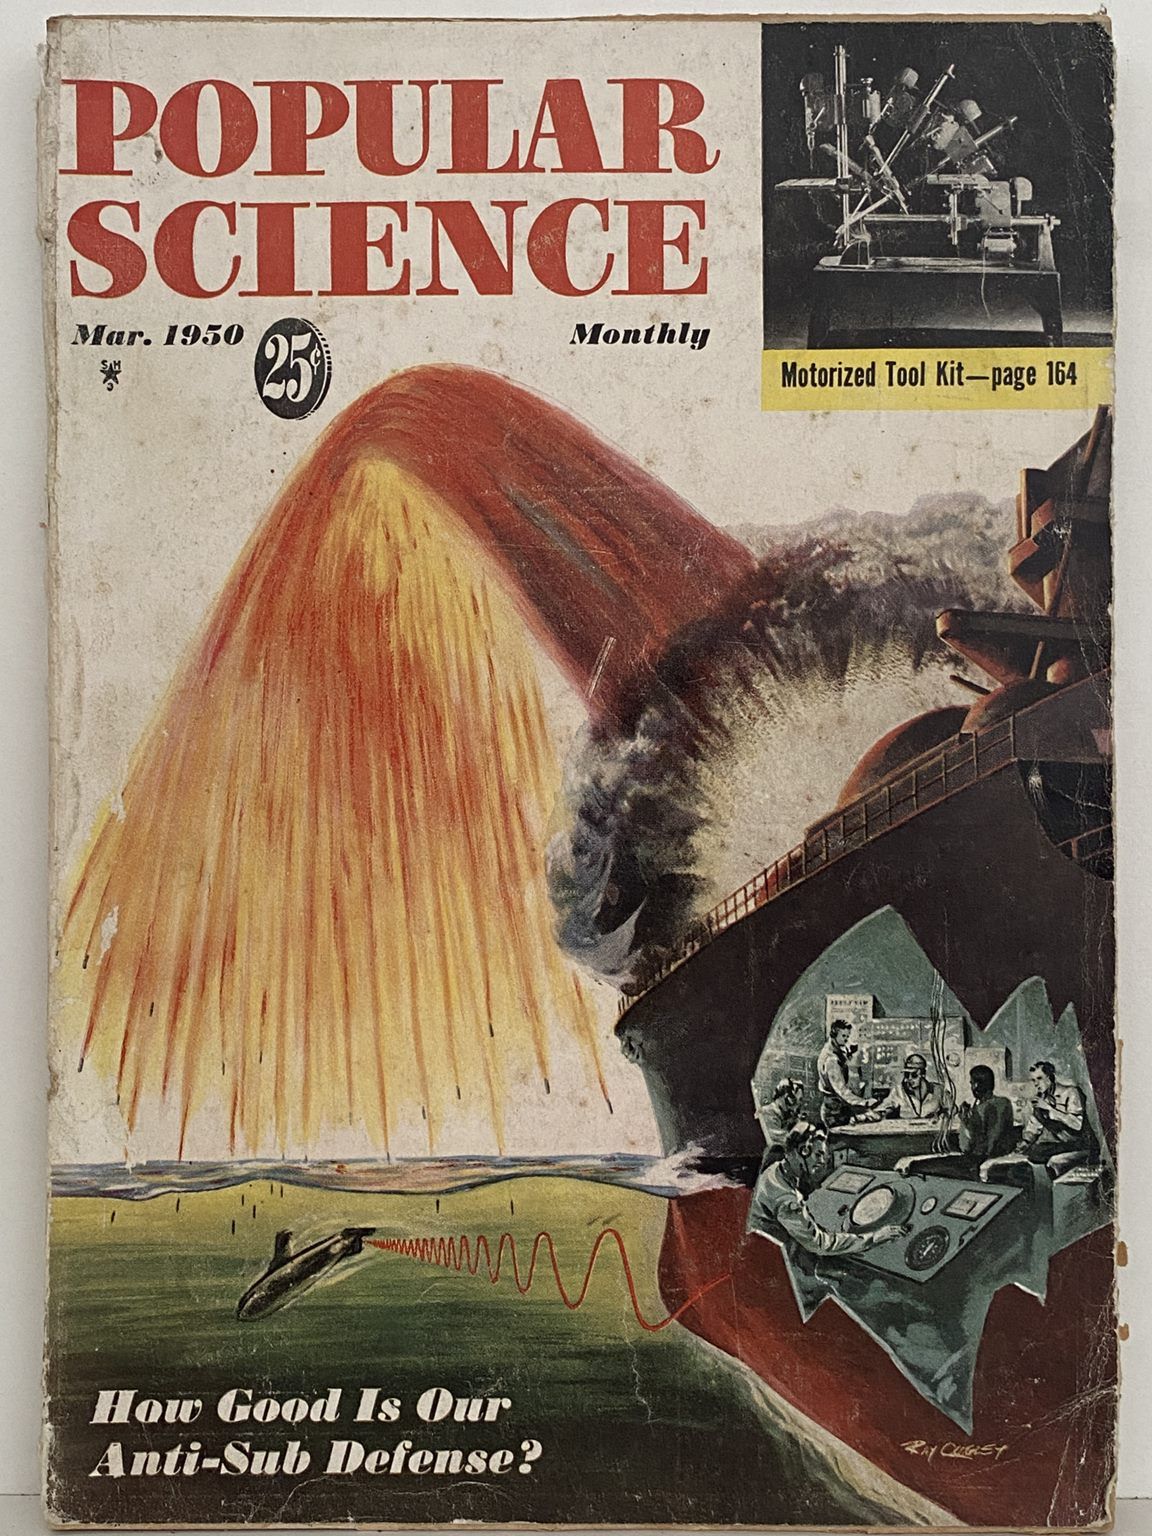 VINTAGE MAGAZINE: Popular Science - March 1950